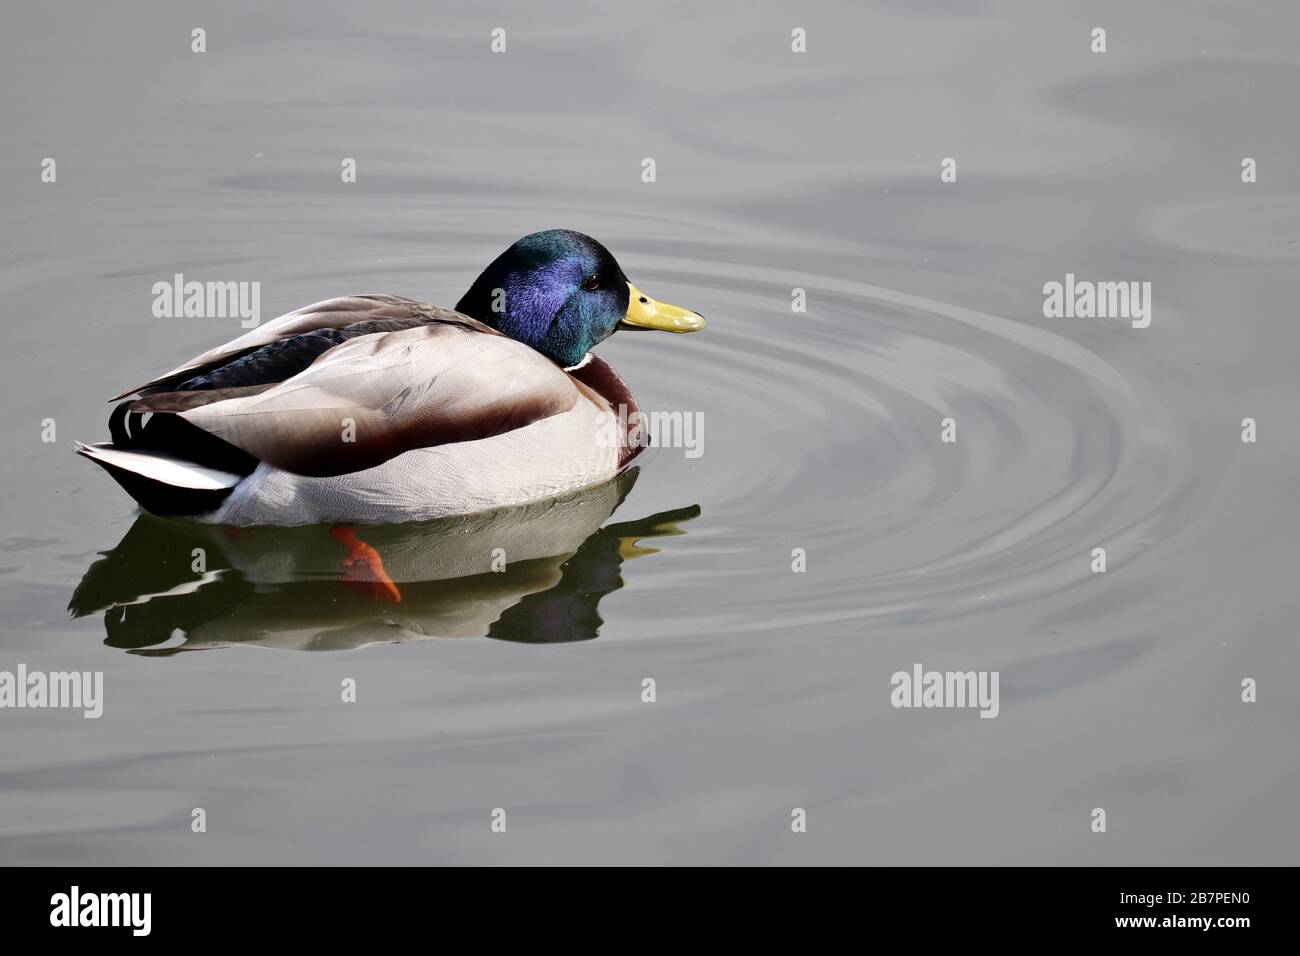 Mallard duck swimming in the water. Male wild duck in the lake Stock Photo